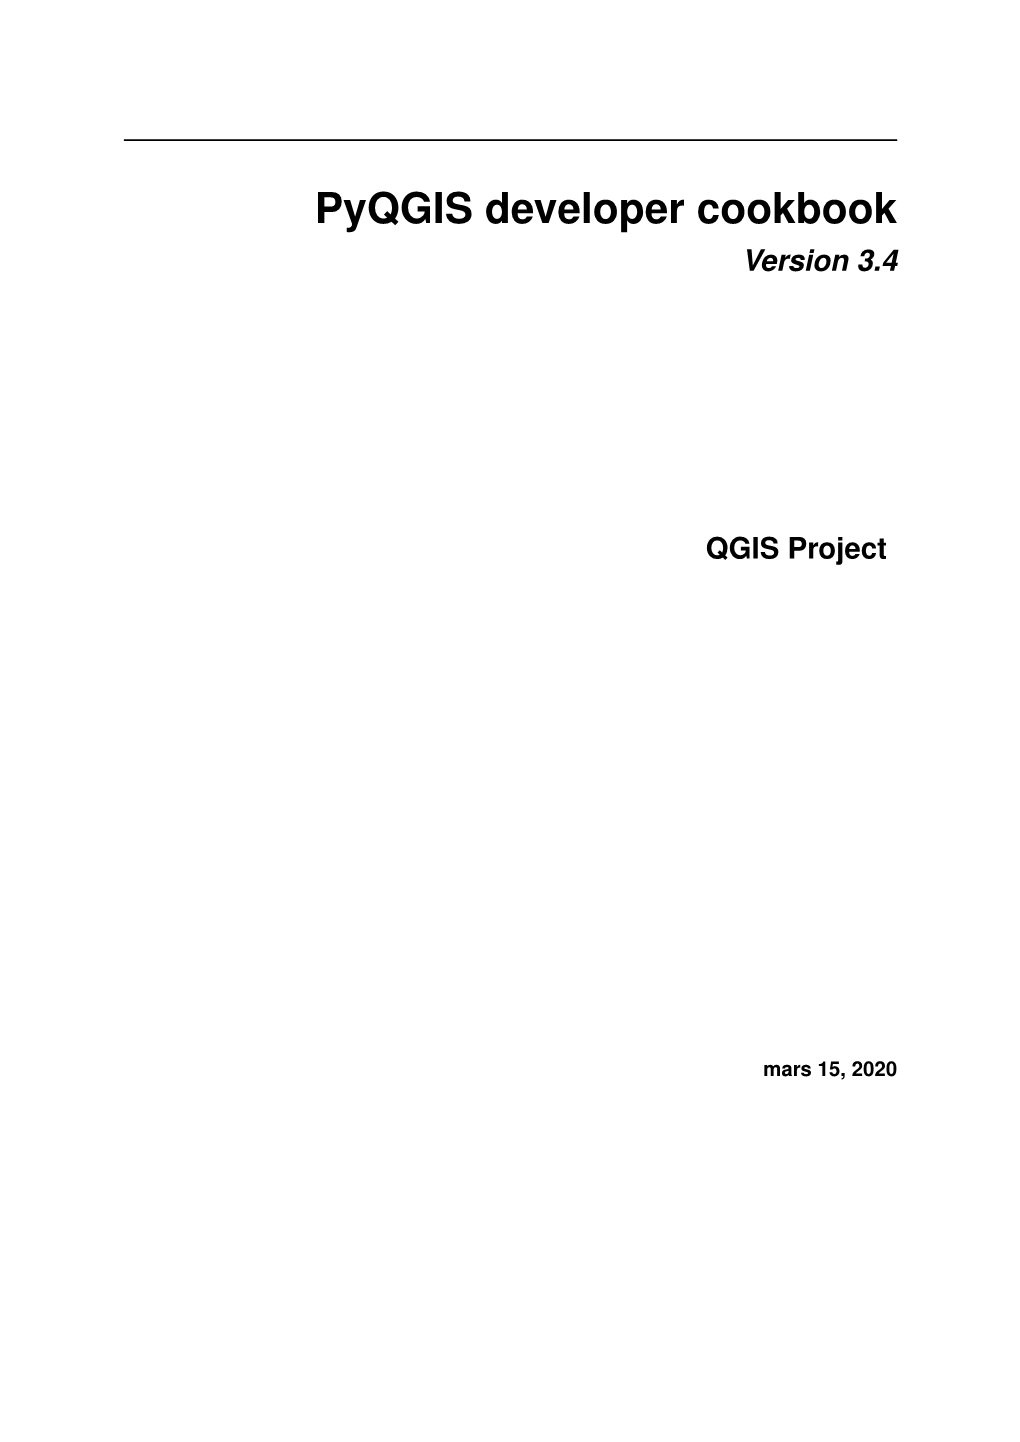 Pyqgis Developer Cookbook Version 3.4